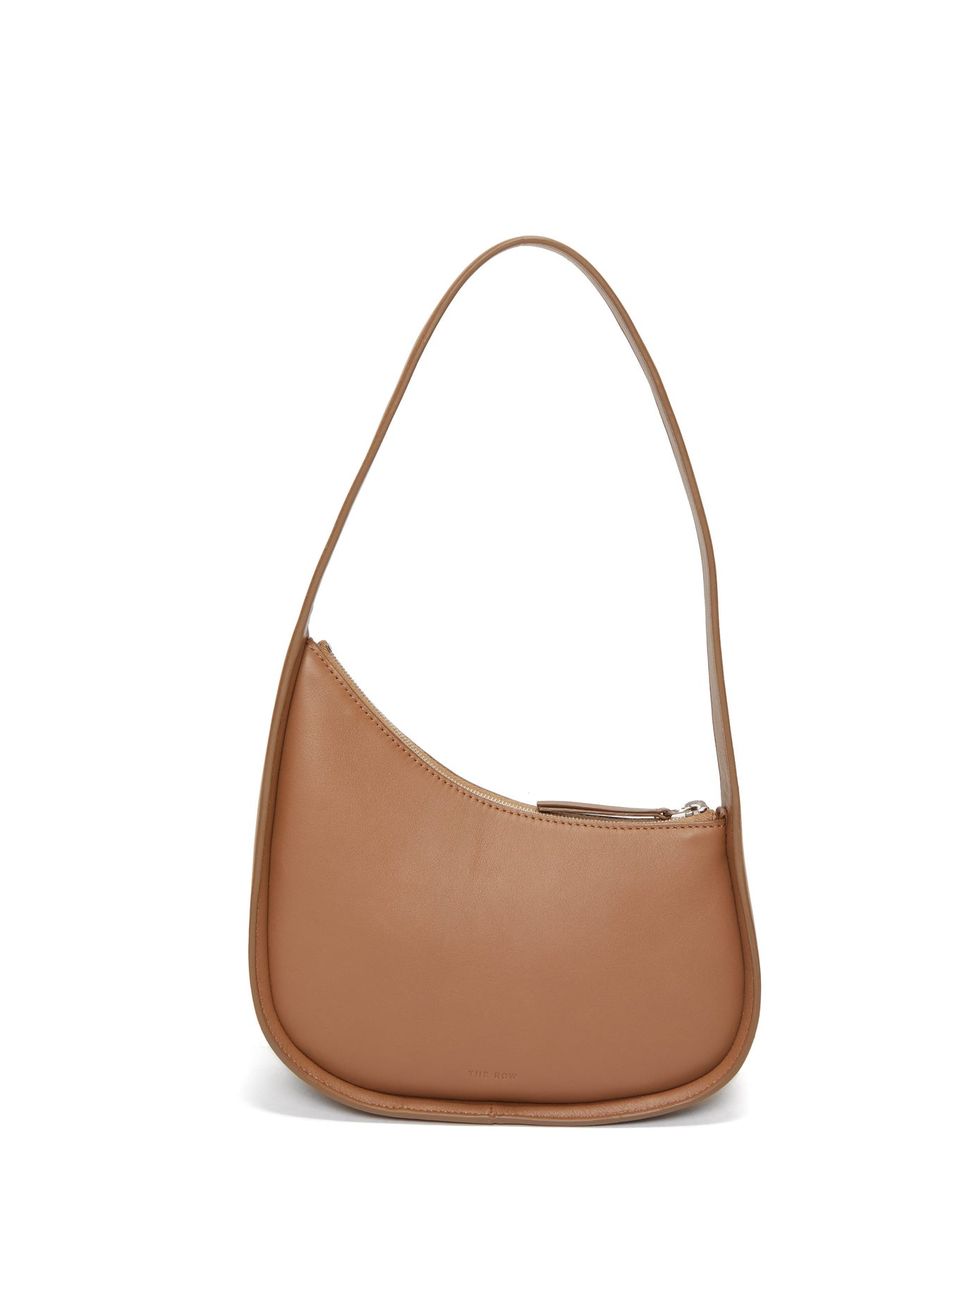 Bag, Handbag, Hobo bag, Tan, Shoulder bag, Brown, Fashion accessory, Leather, Beige, Peach, 